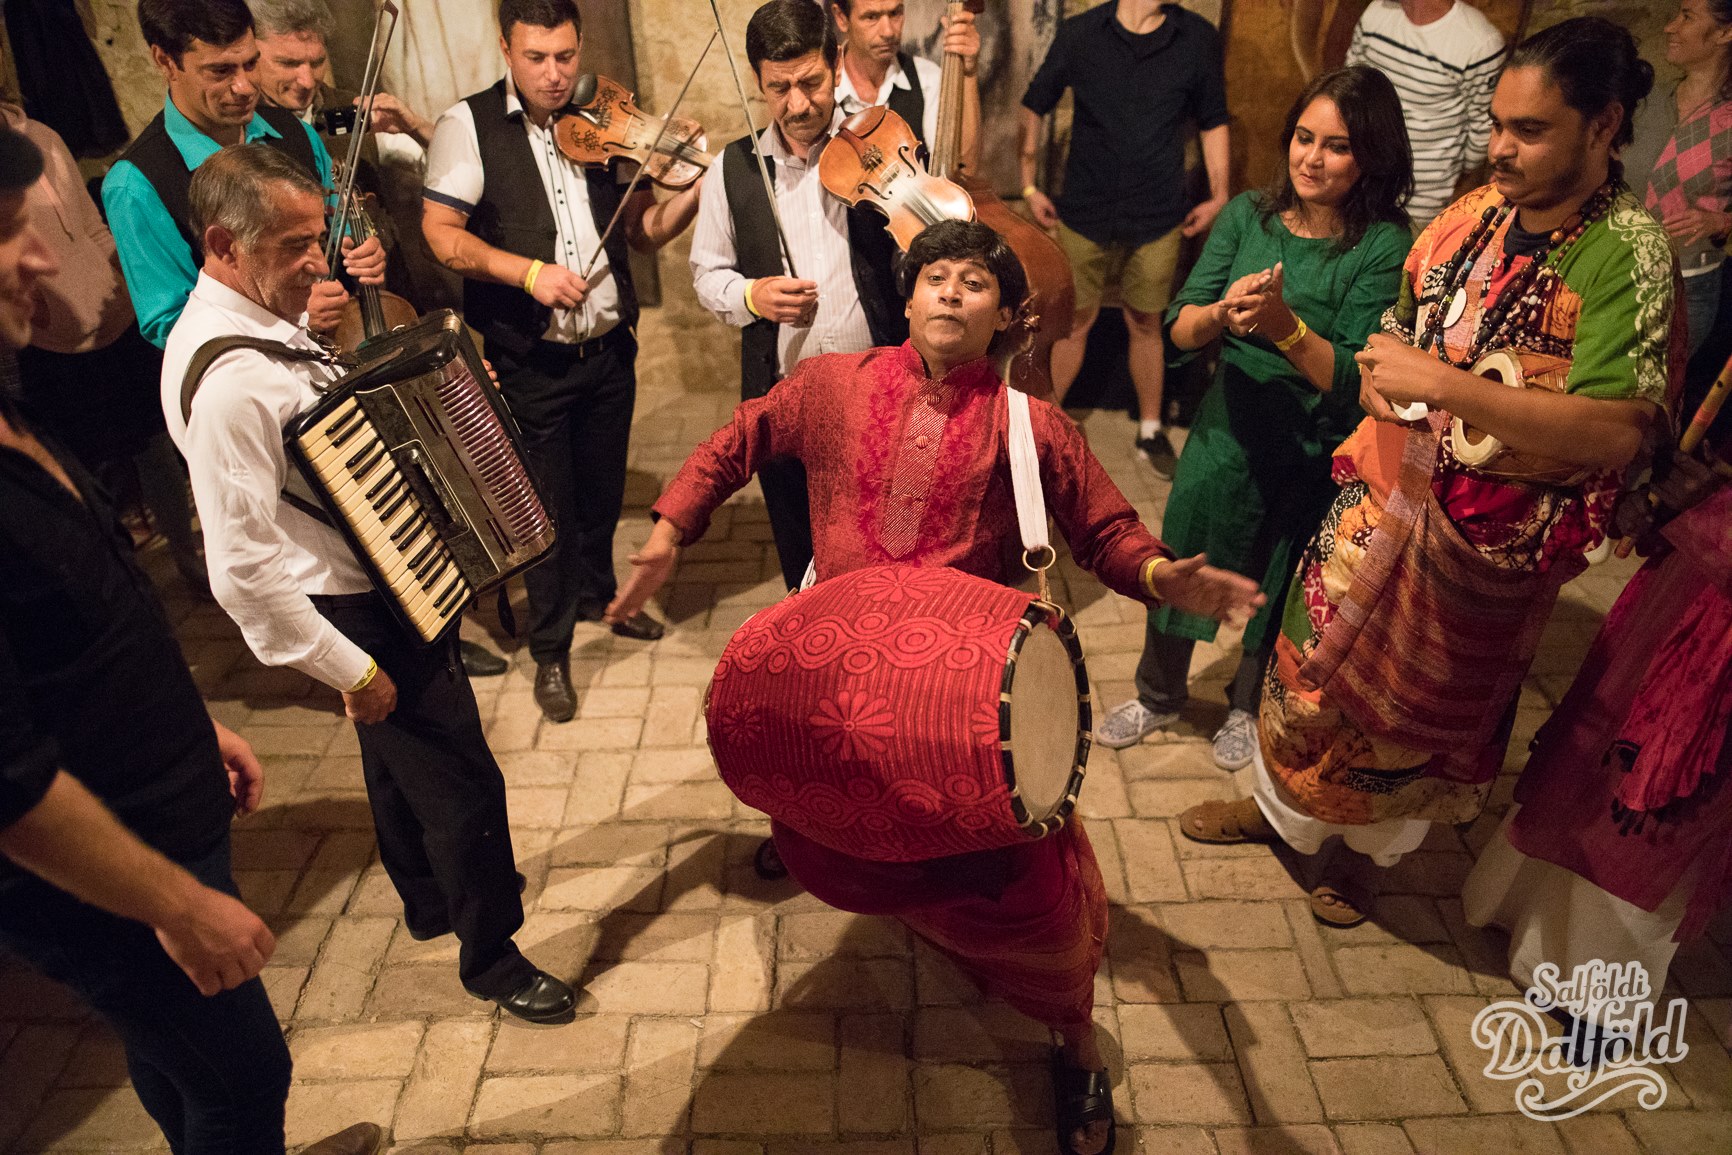 Salföldi Dalföld Music Festival, Hungary, July 7-8, 2018